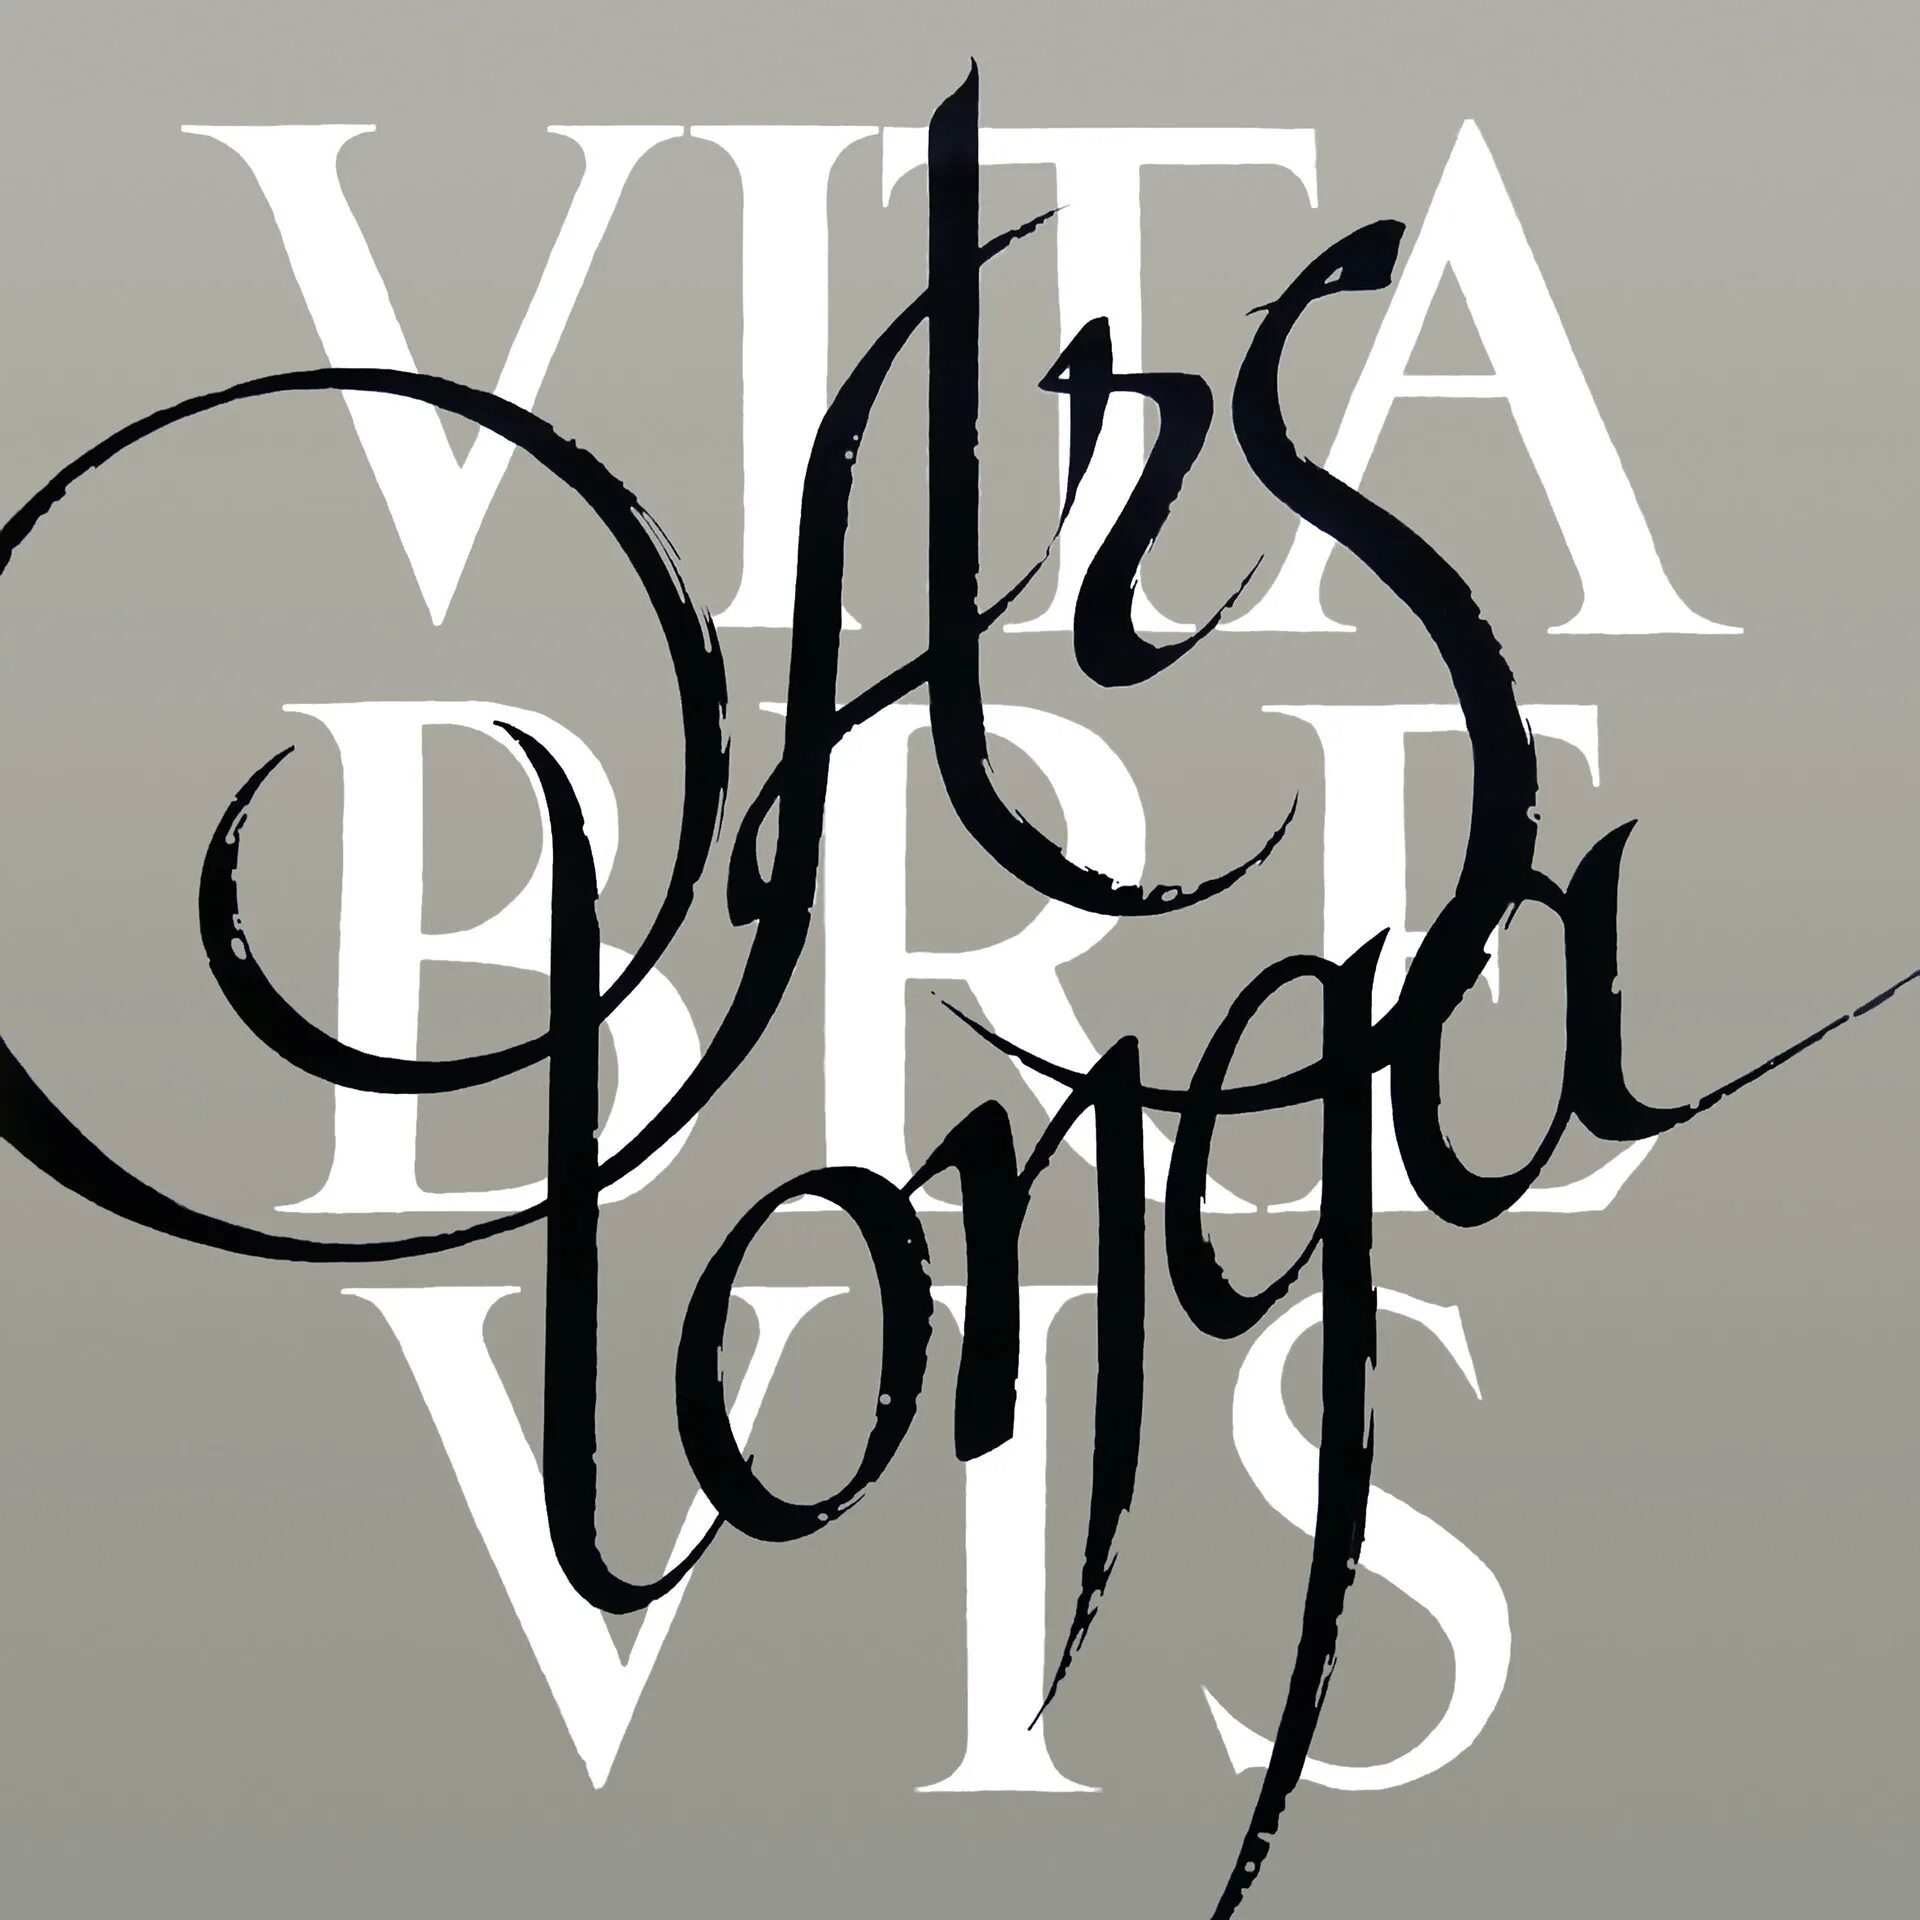 Vita brevis est. ARS longa Vita Brevis каллиграфия. Шрифт композиция. Композиция из двух шрифтов.